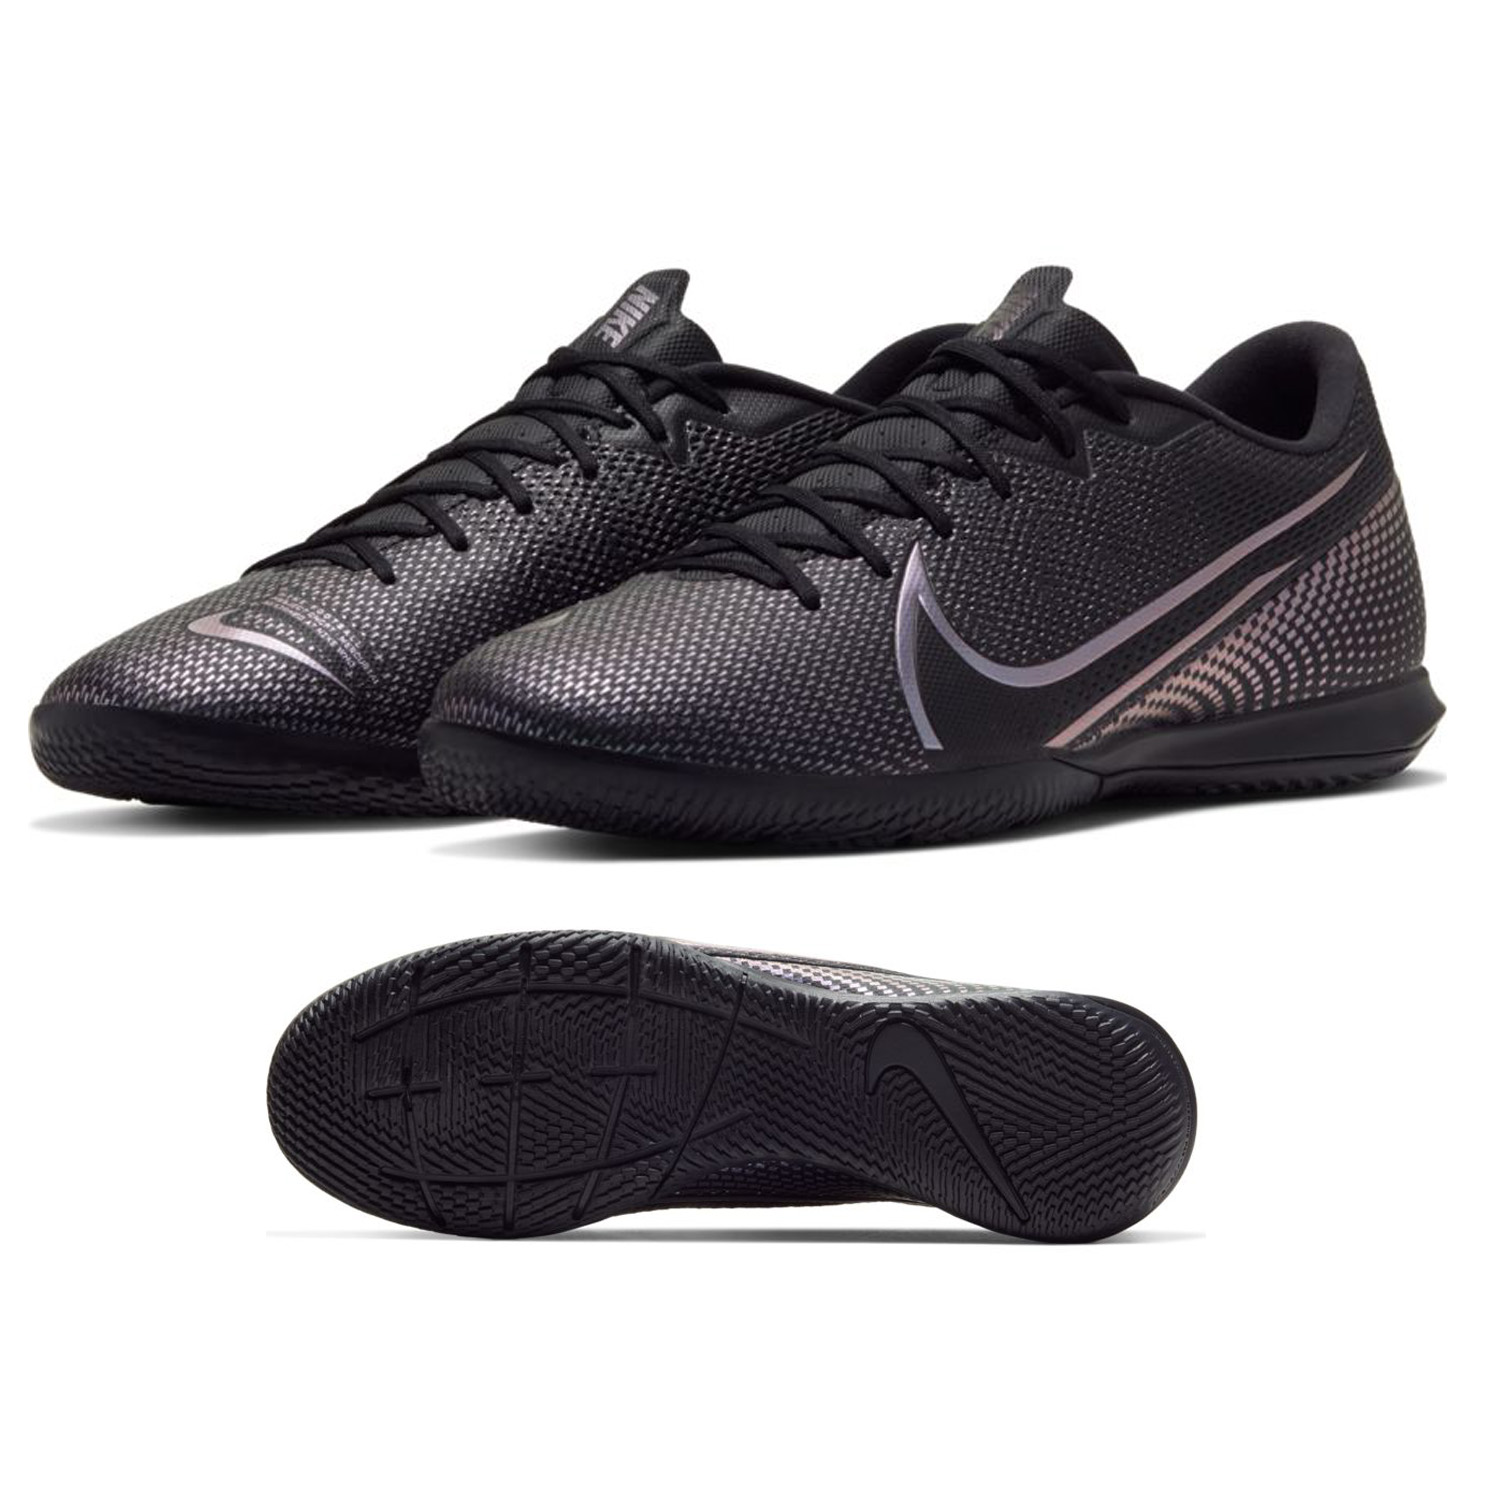 Nike Mercurial Vapor 13 Academy Indoor Soccer (Black/Black) @ SoccerEvolution